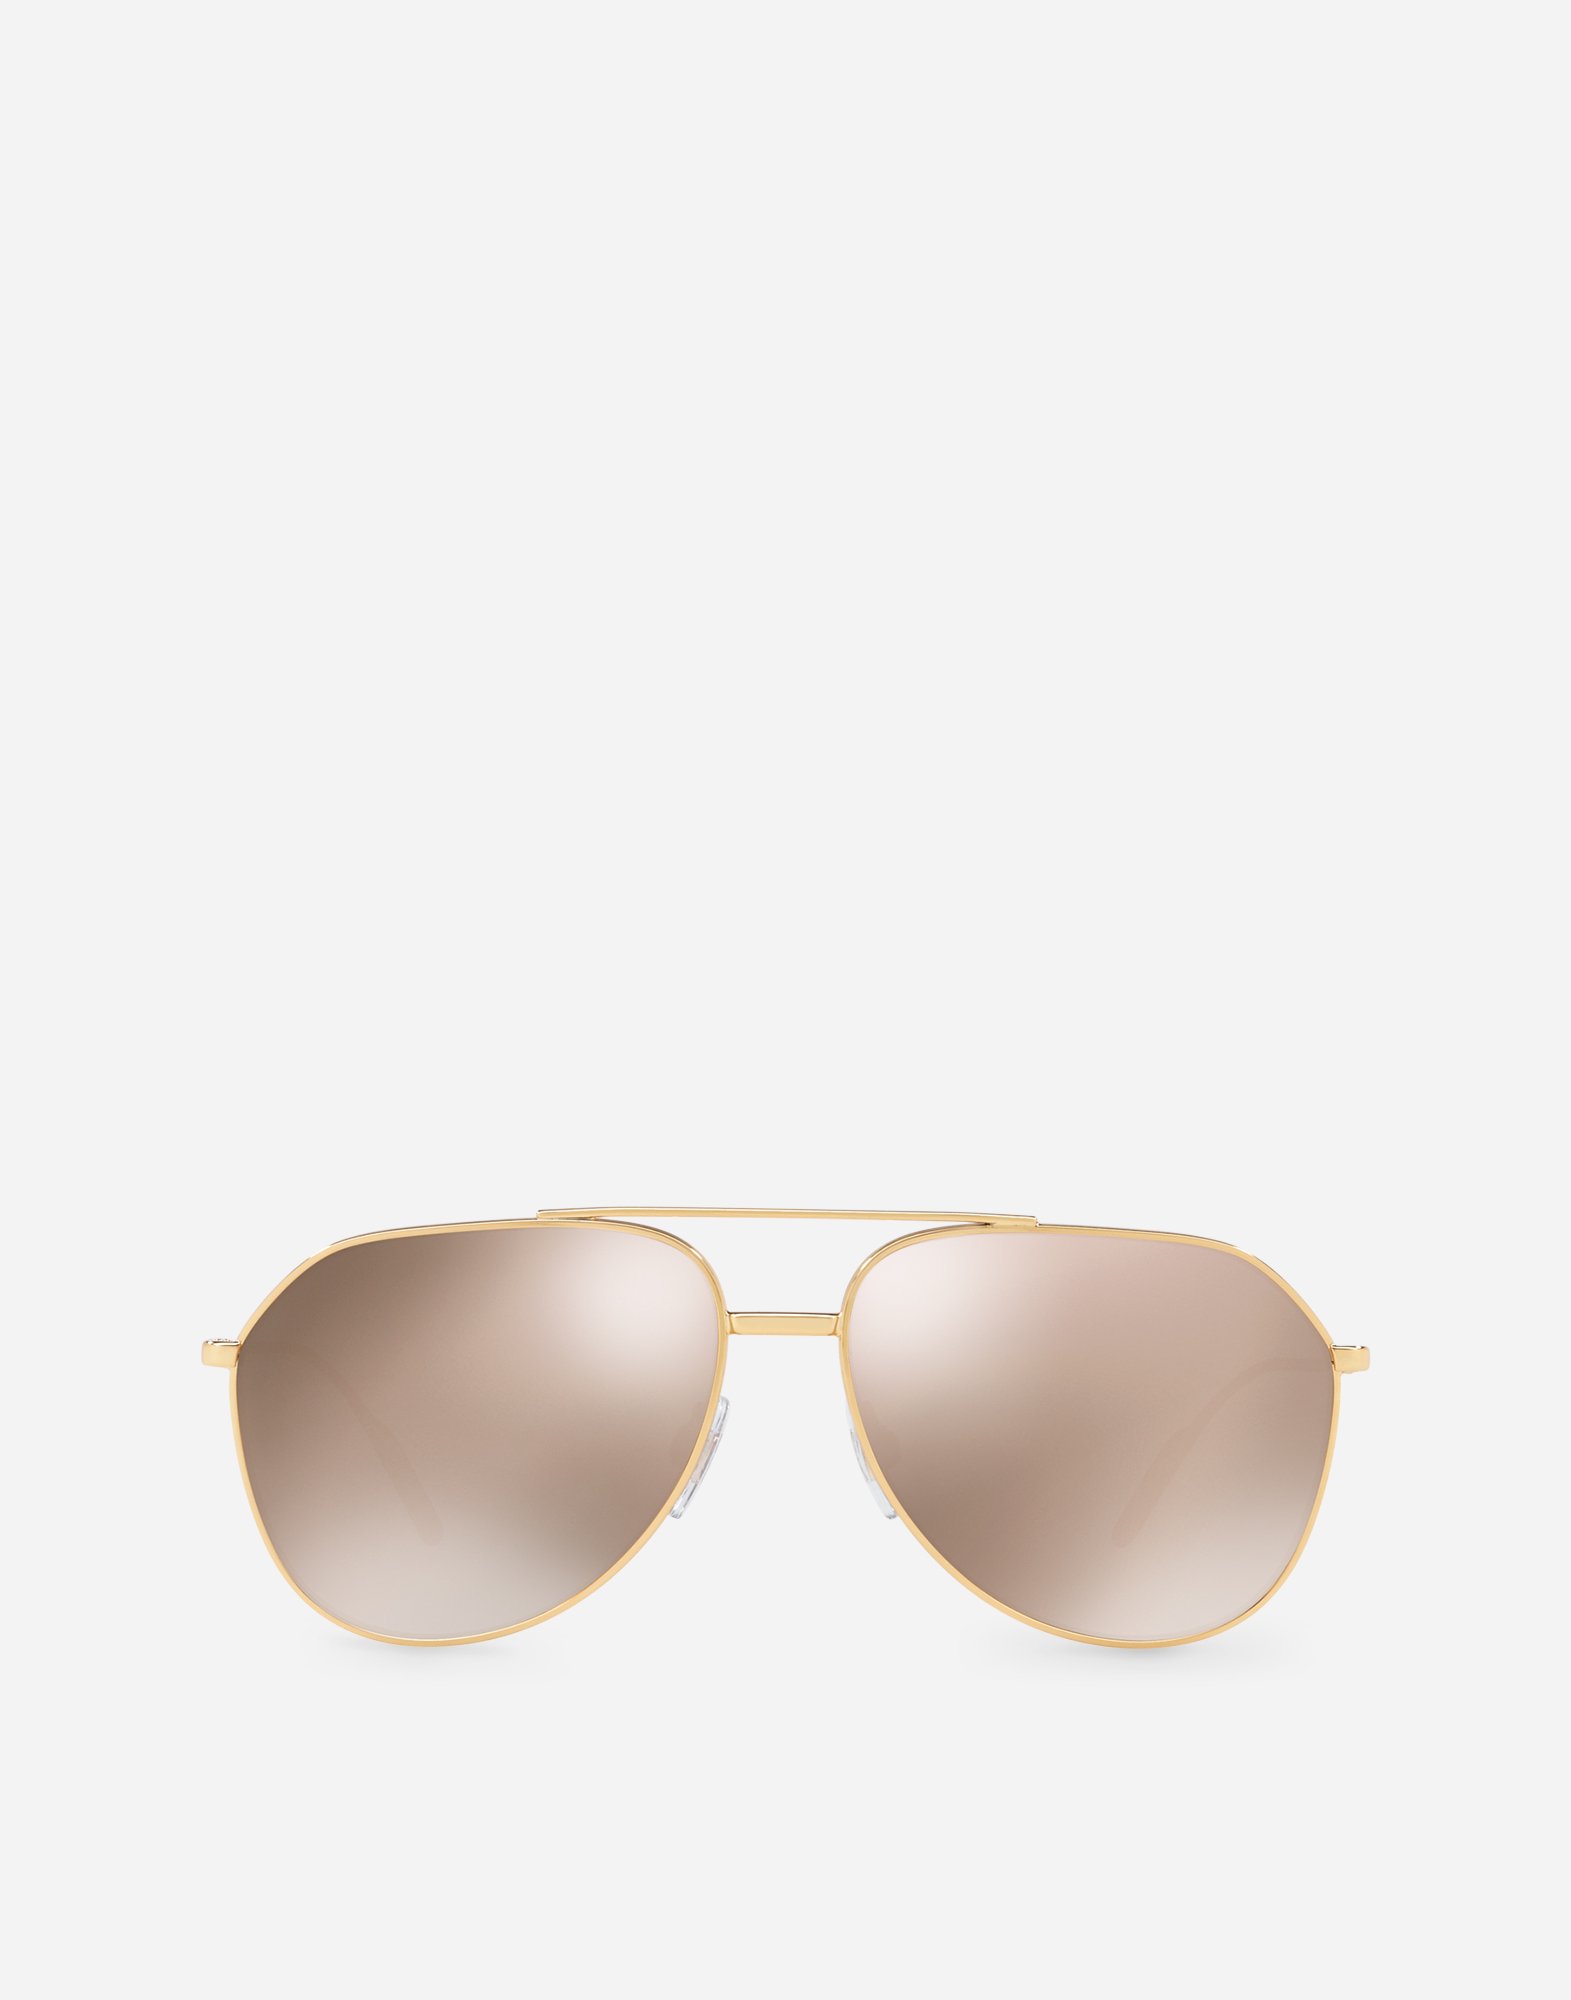 dolce and gabbana 18k gold sunglasses